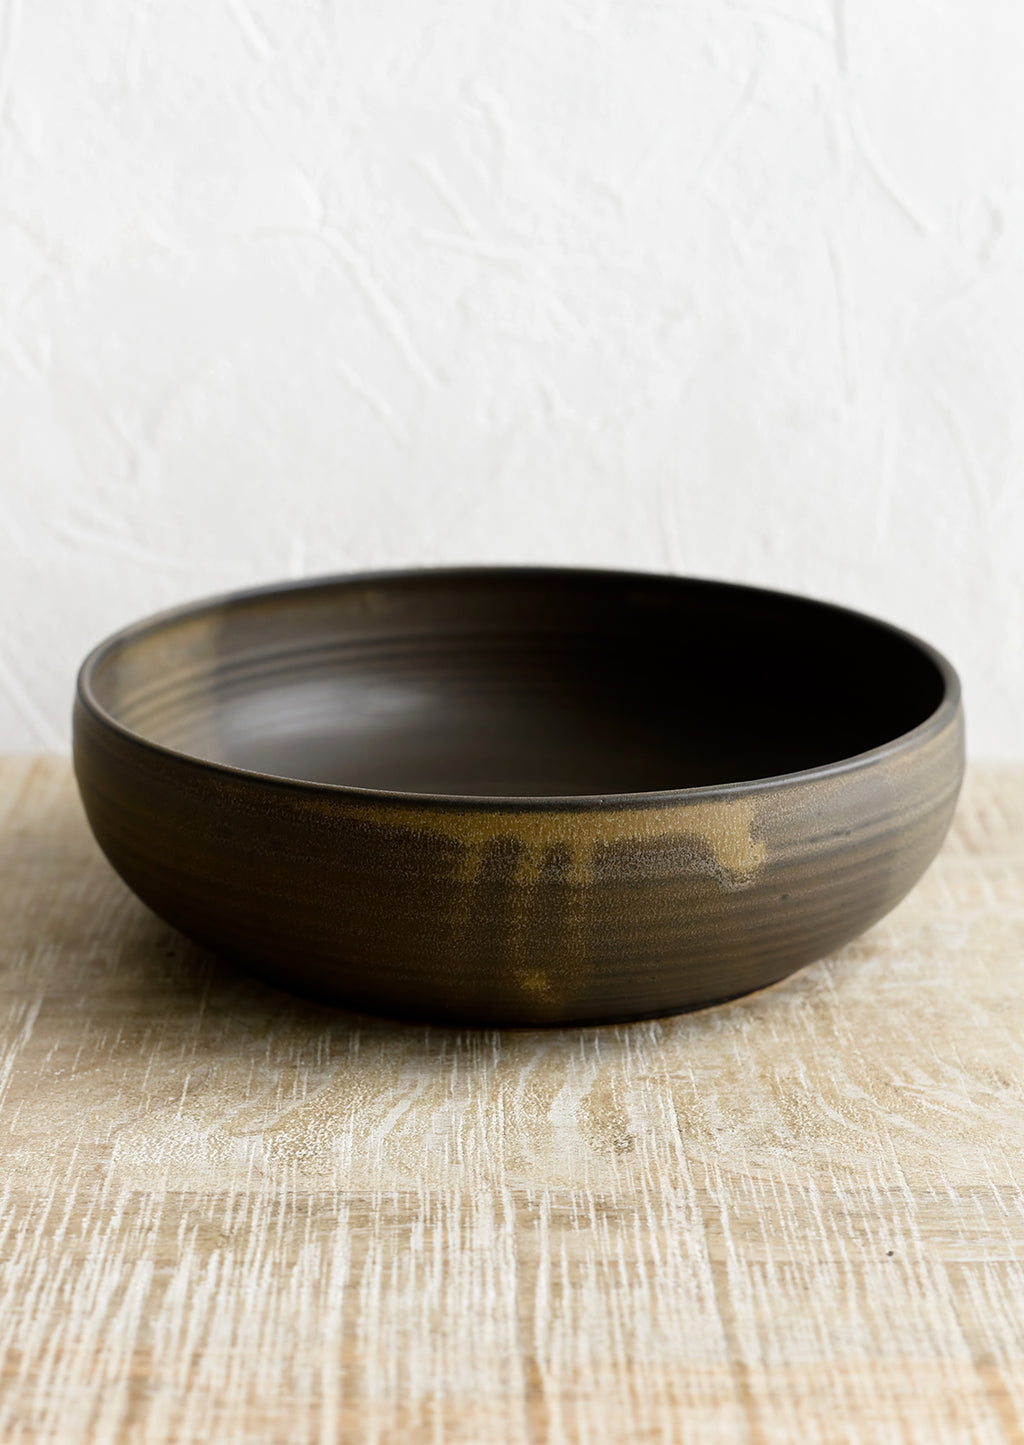 Matte Earth: A ceramic serving bowl in matte brown.